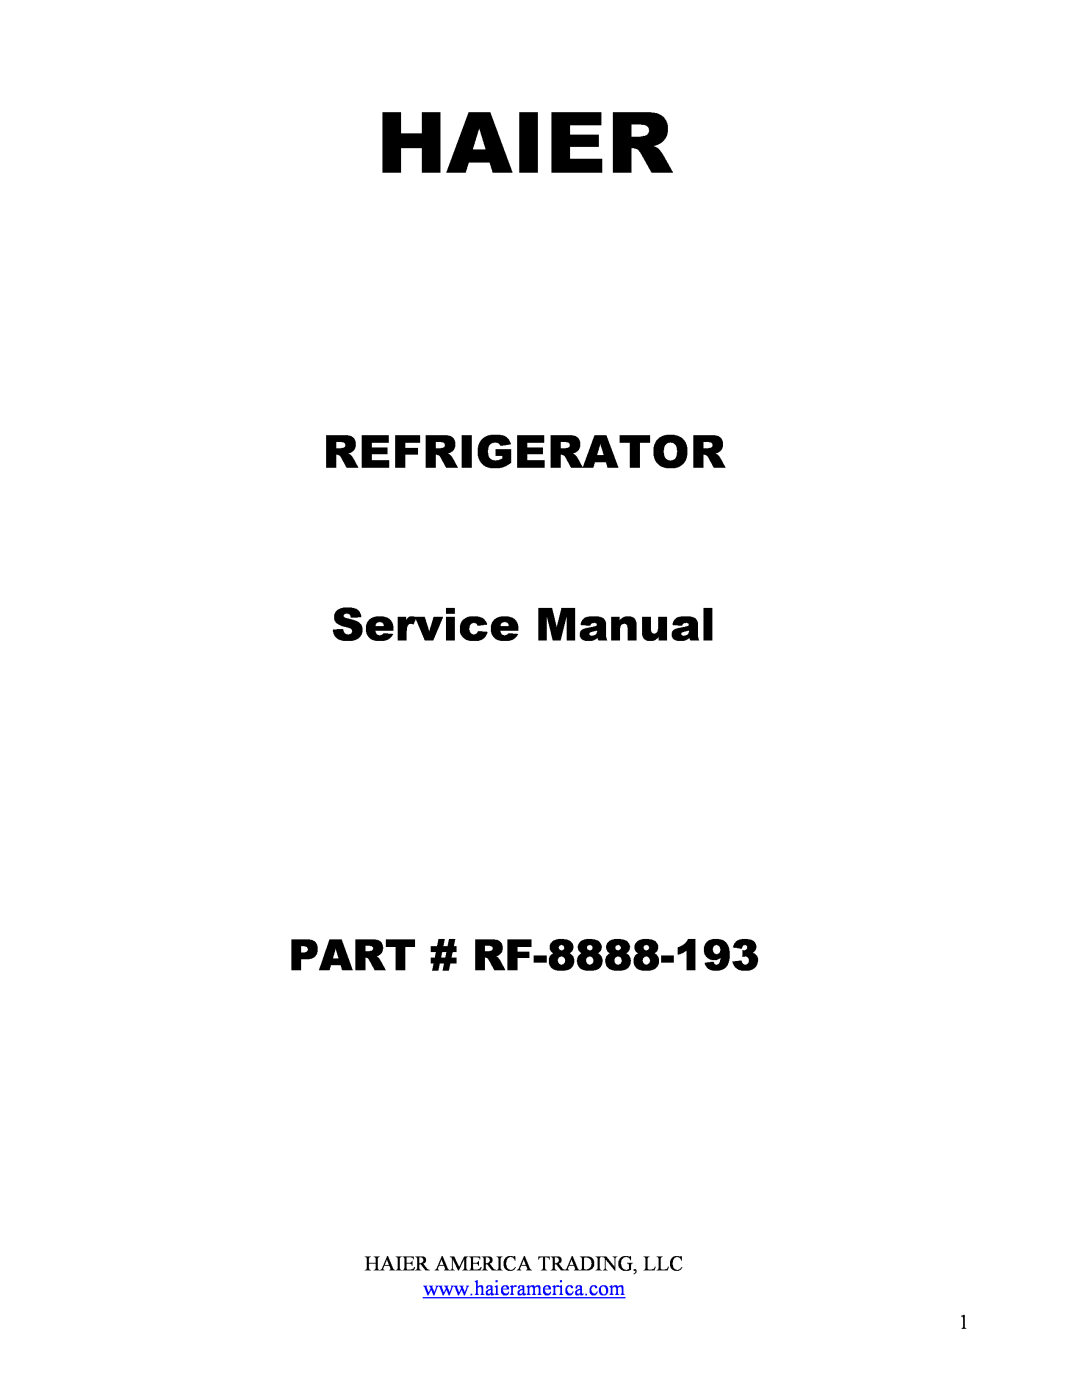 Haier service manual Haier America Trading, Llc, PART # RF-8888-193 